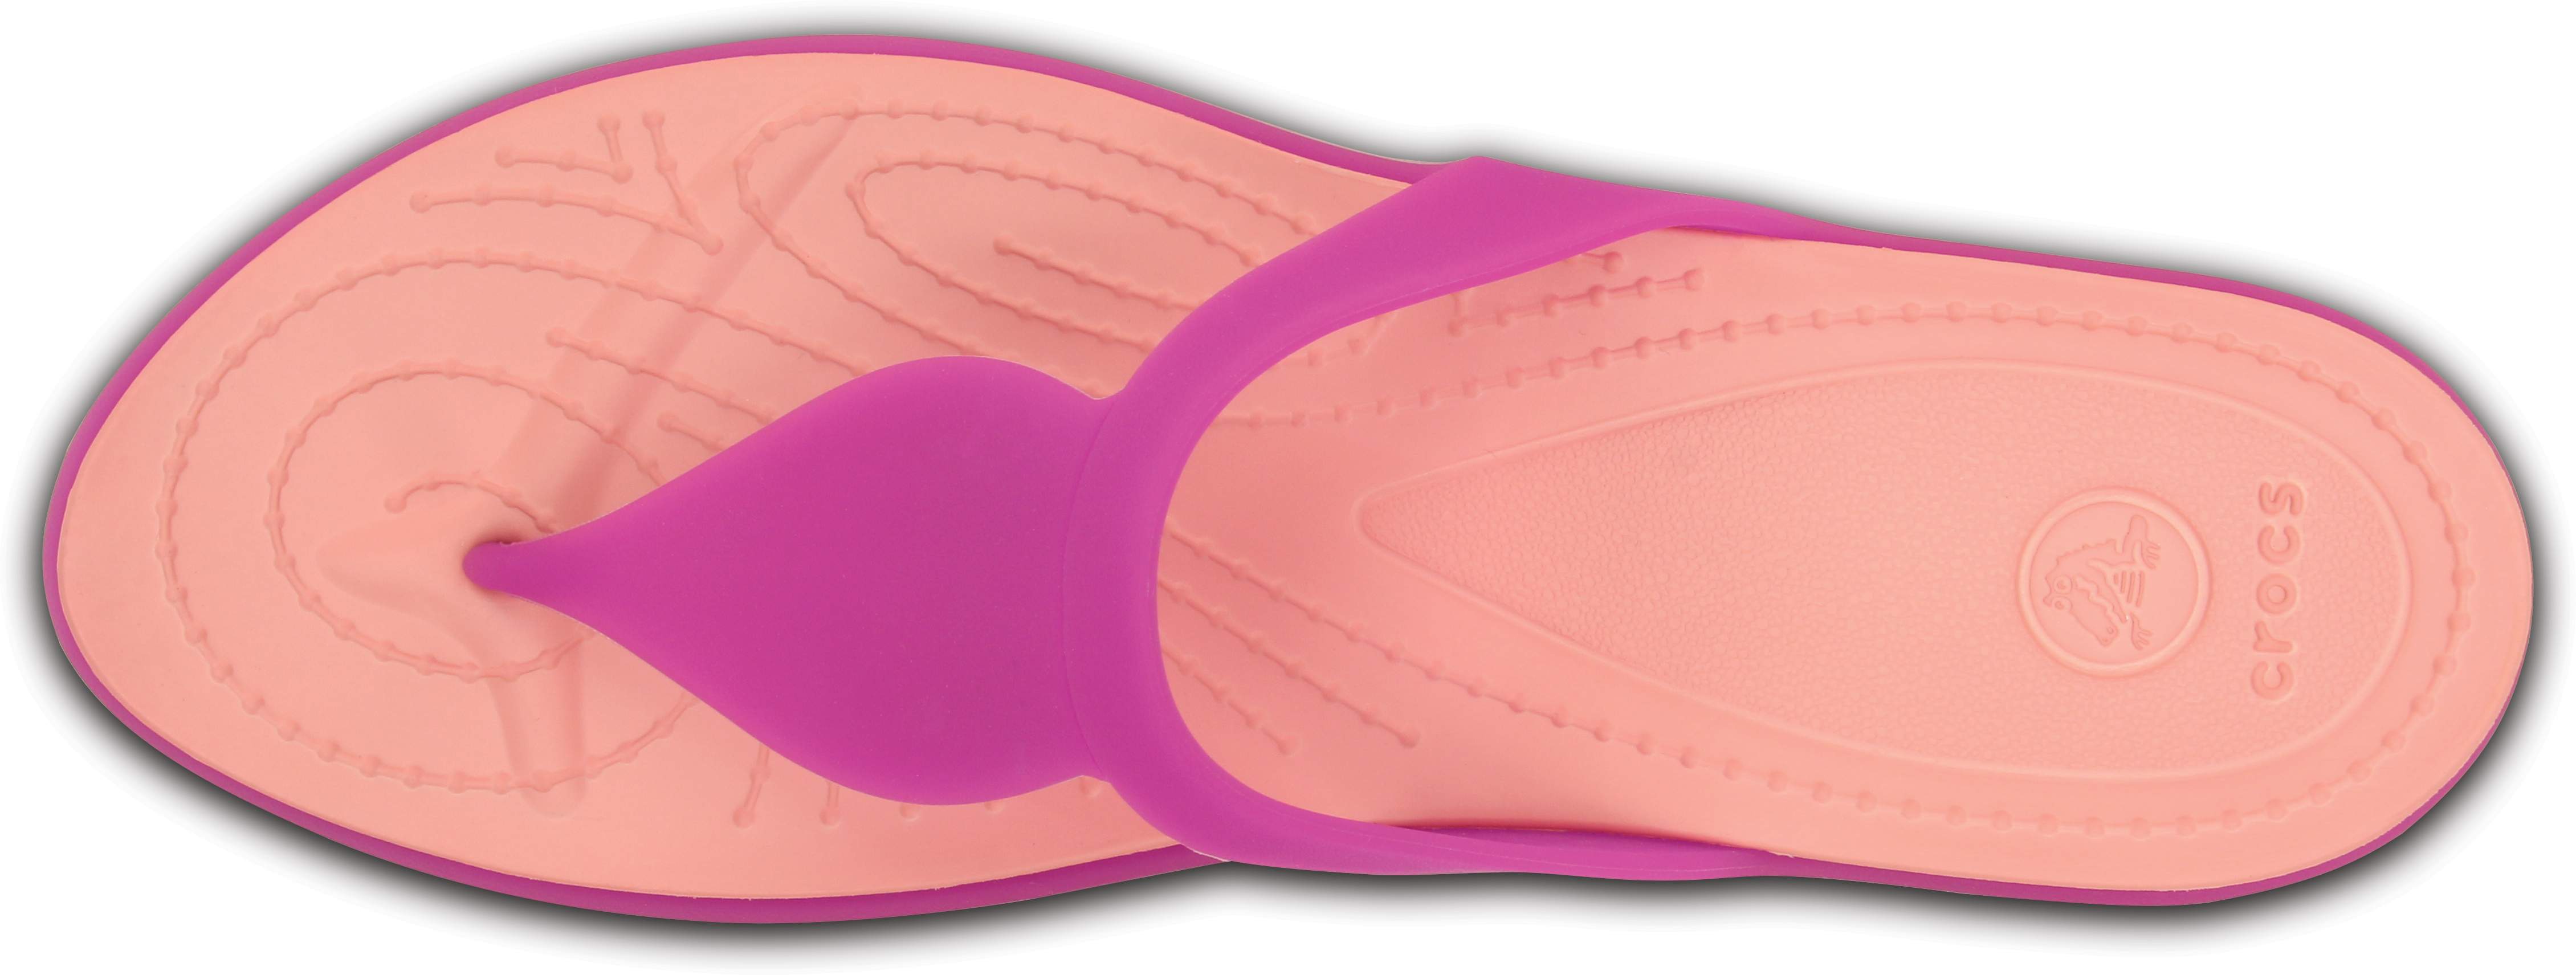 Crocs Rio Womens Flip Flop | eBay